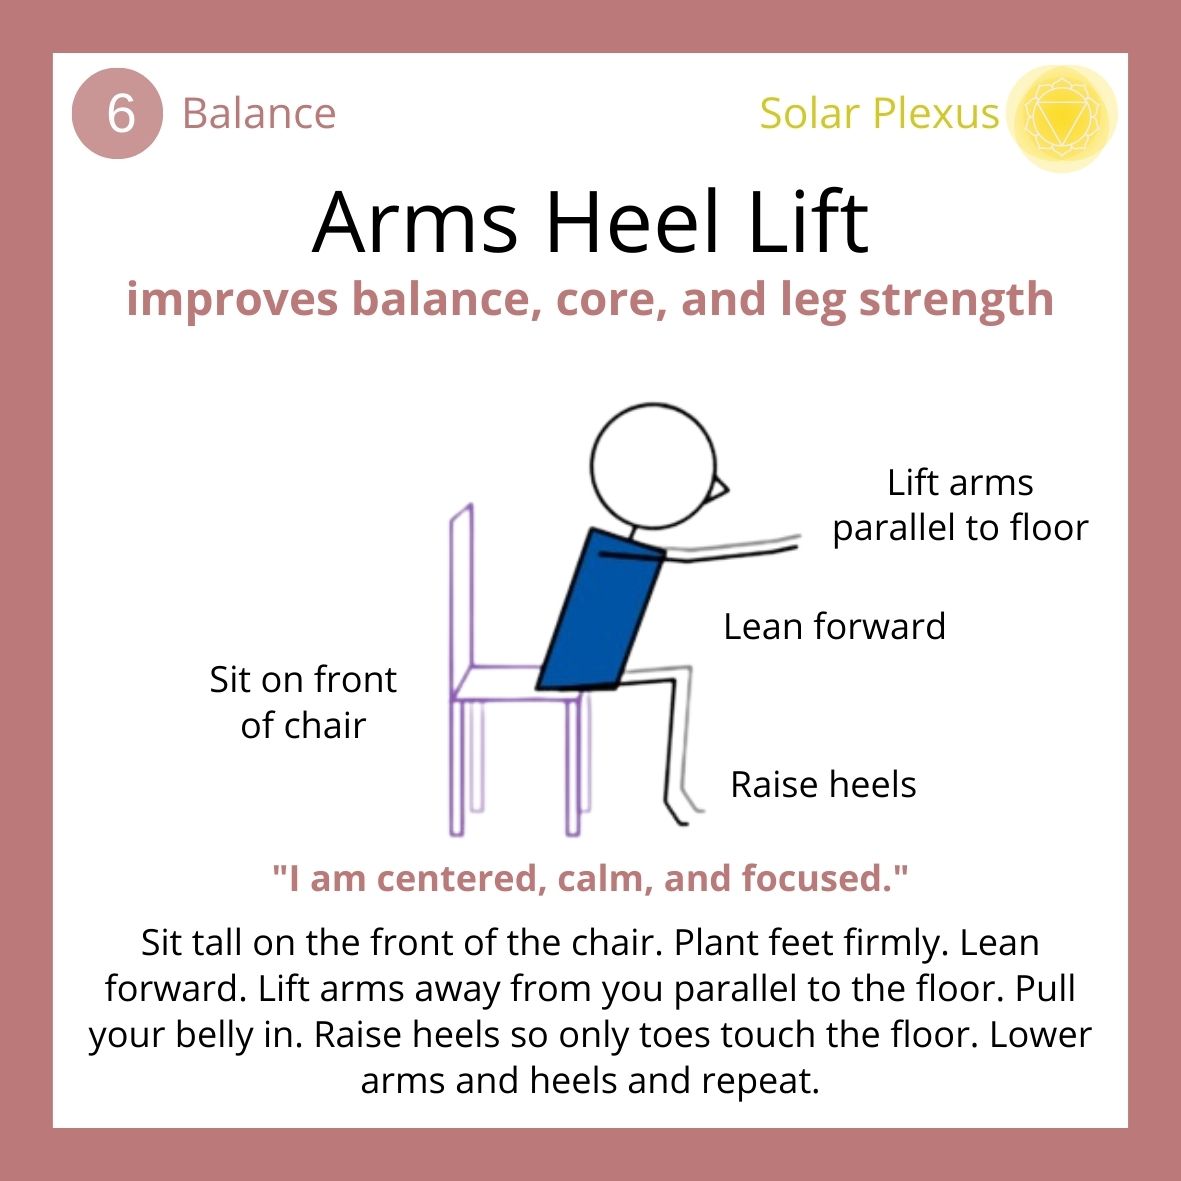 Balance Arms Heel Lift